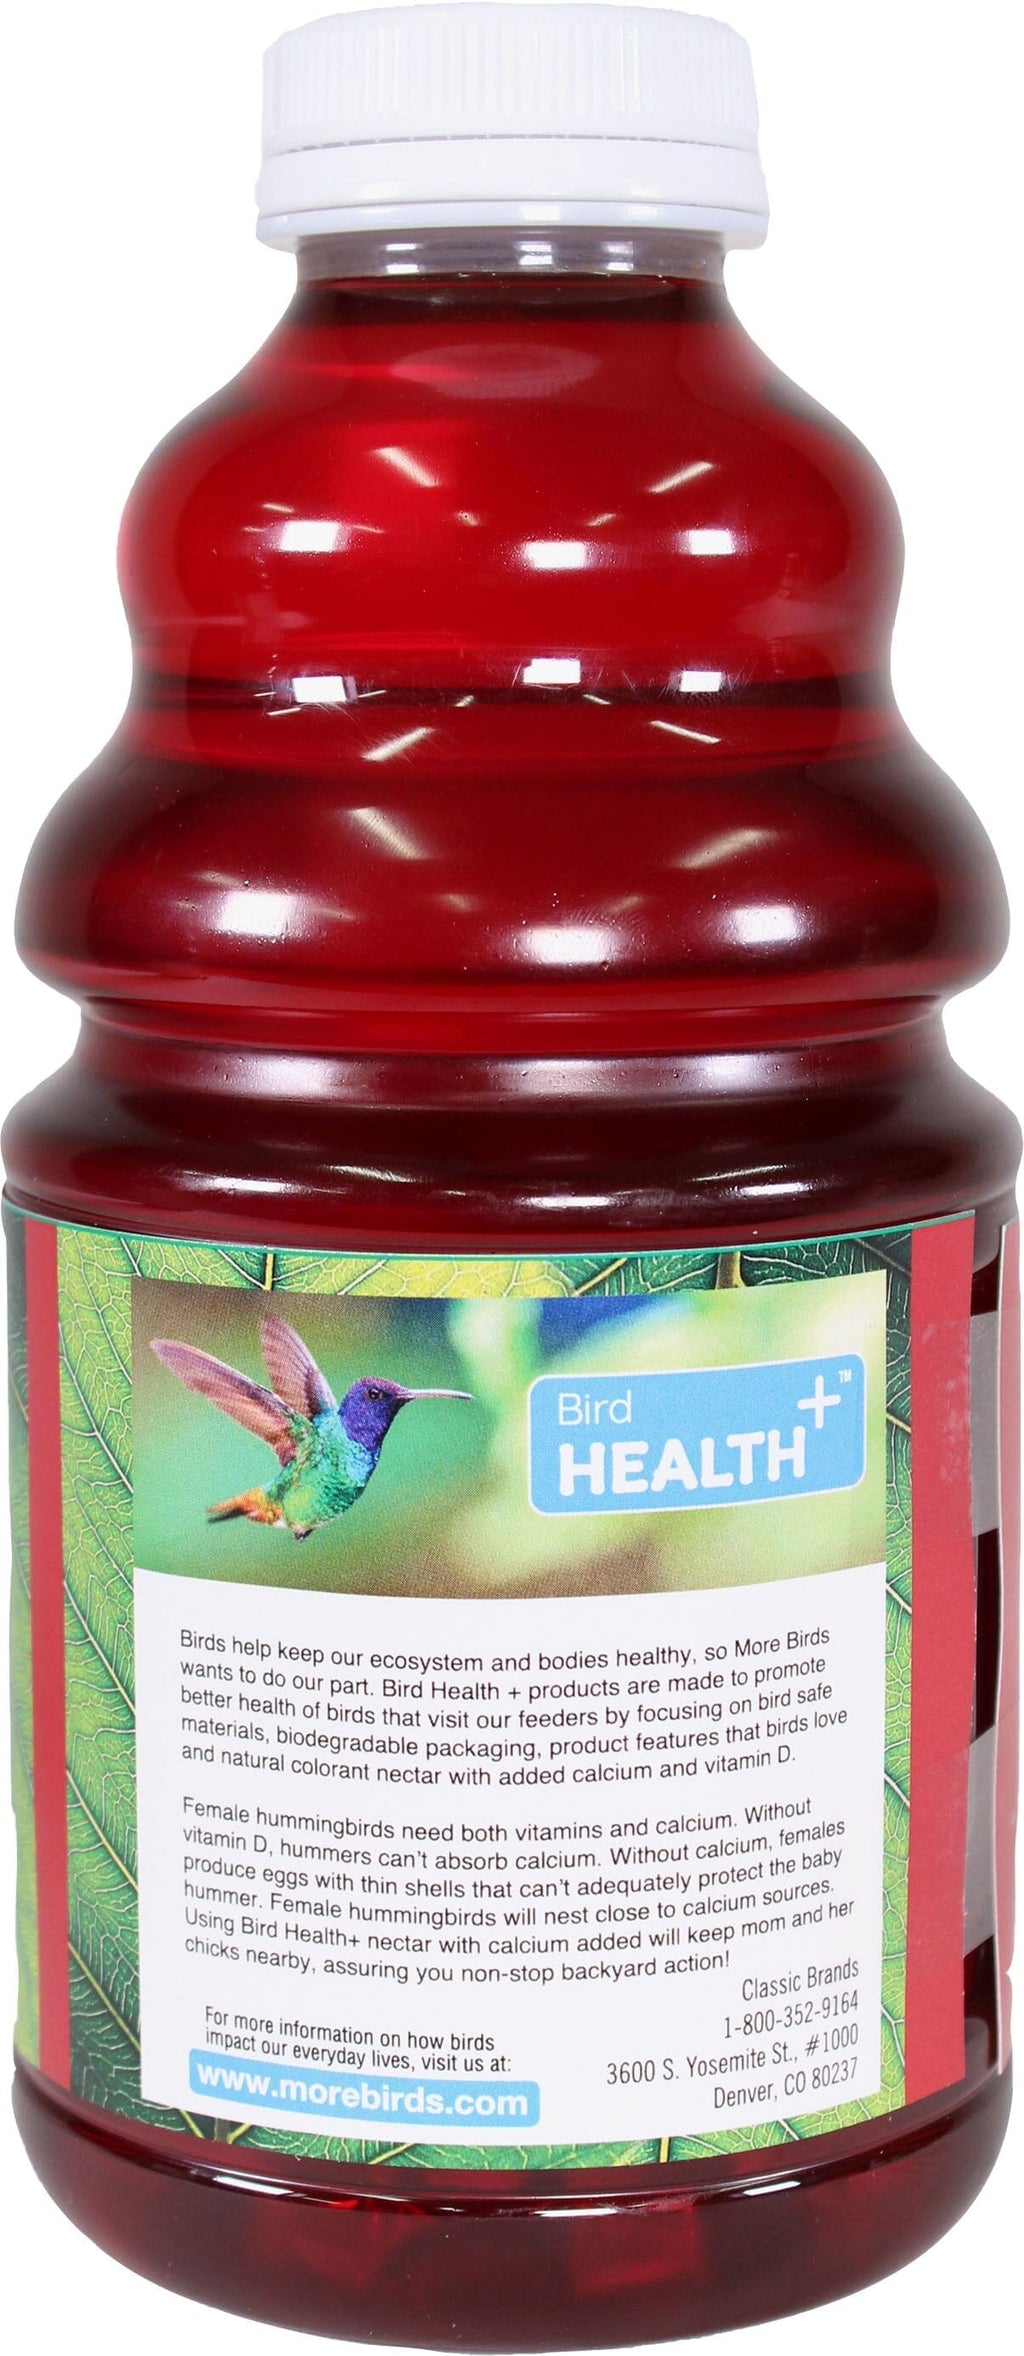 Bird Health + Hummingbird Nectar Concentrate Wild Bird Food - Red - 32 Oz  